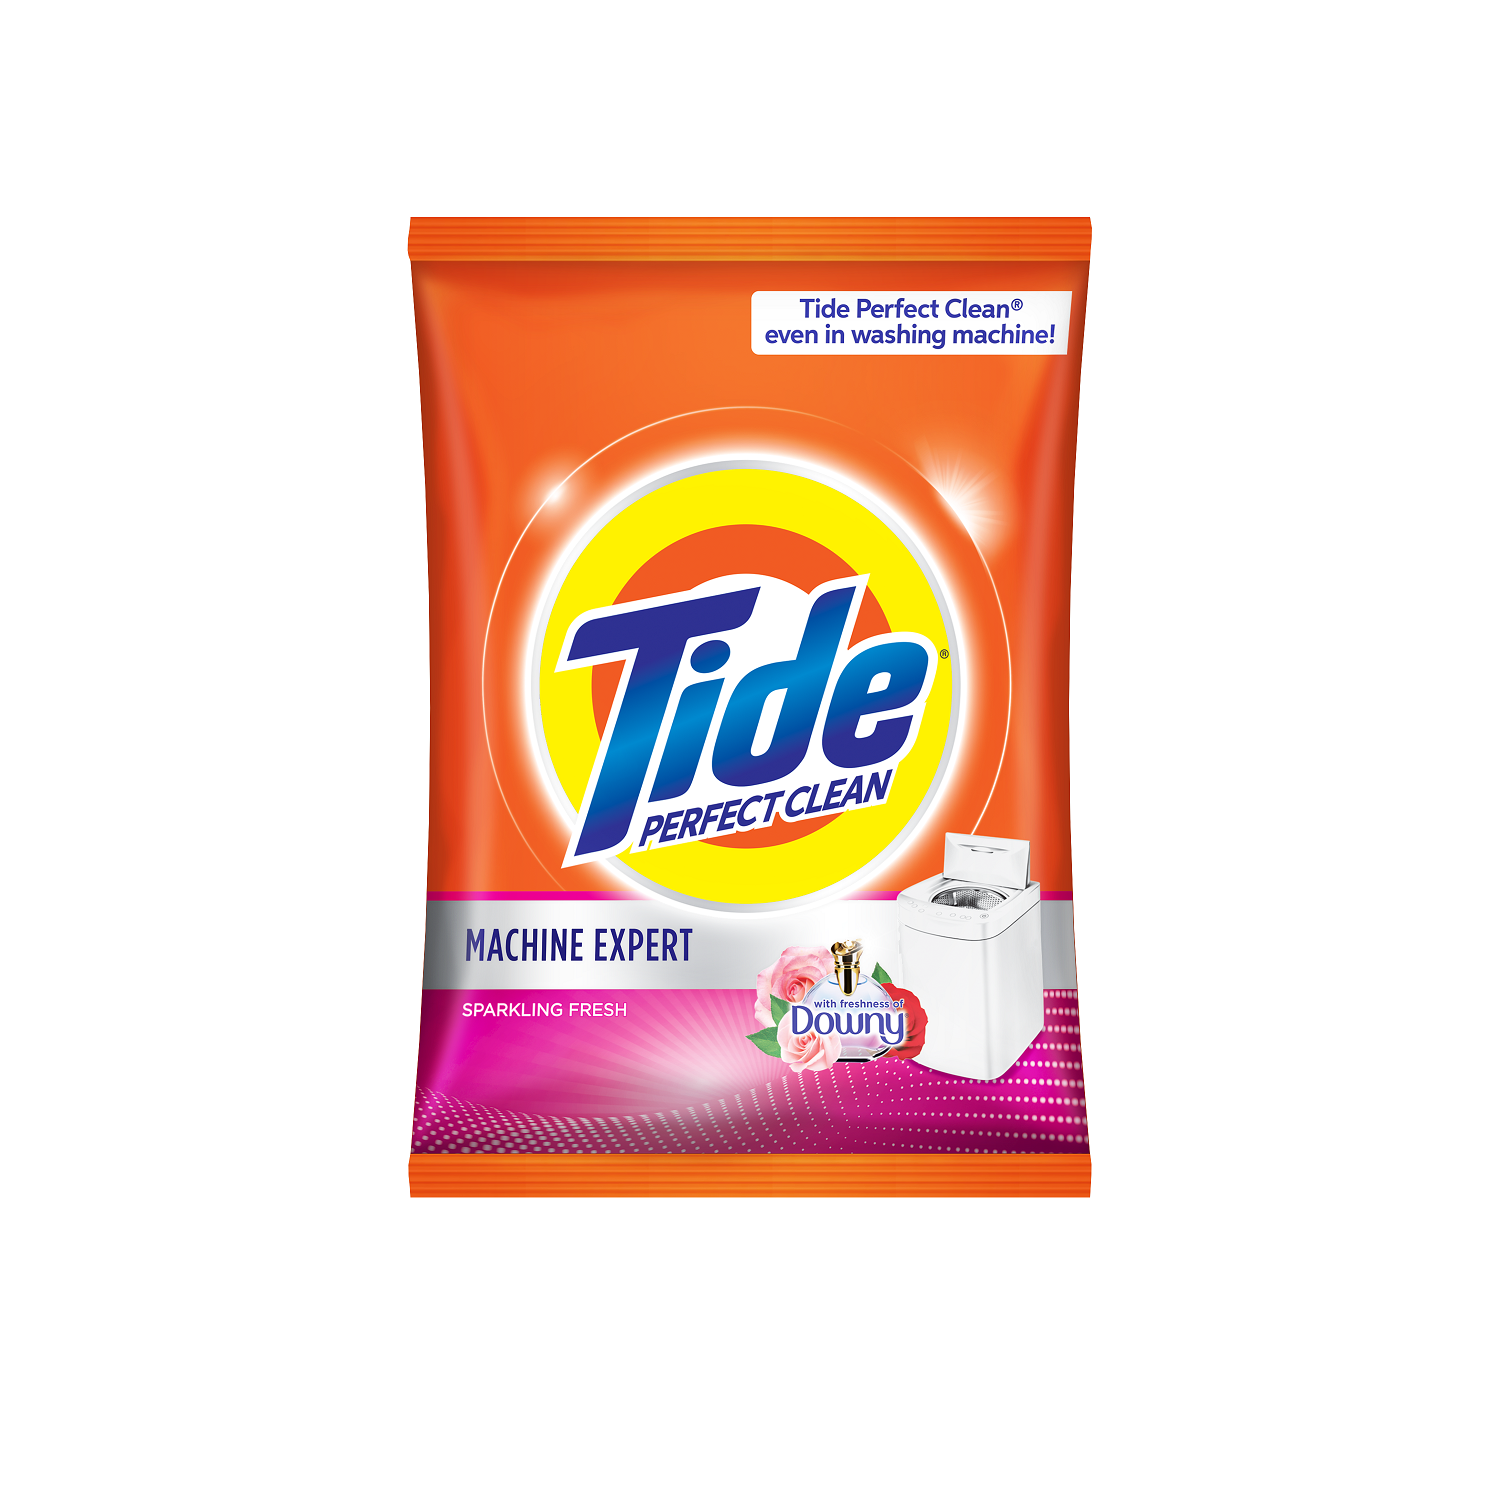 Tide Perfect Clean Powder Detergent Machine Expert Sparkling Fresh 1640g (Laundry Detergent, Laundry Powder)